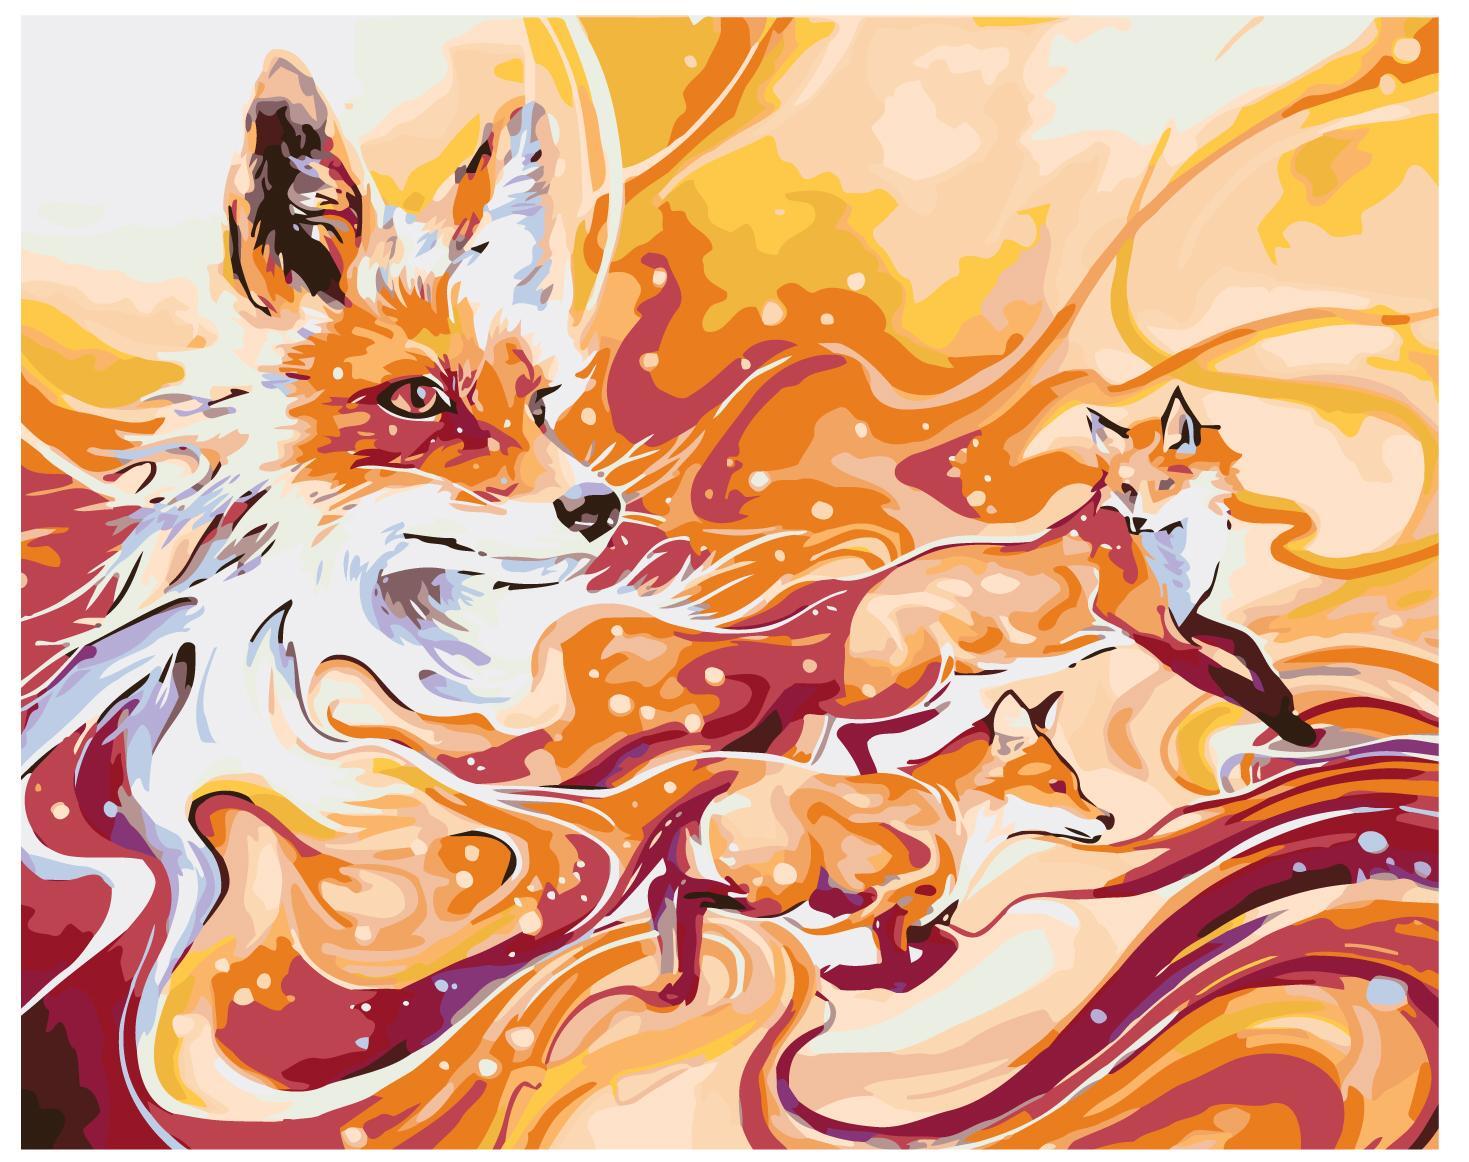 Flaming fox. Кицунэ лиса. Огненная лисица Кицунэ. Лисий огонь Кицунэ. Картина Кицунэ лиса.